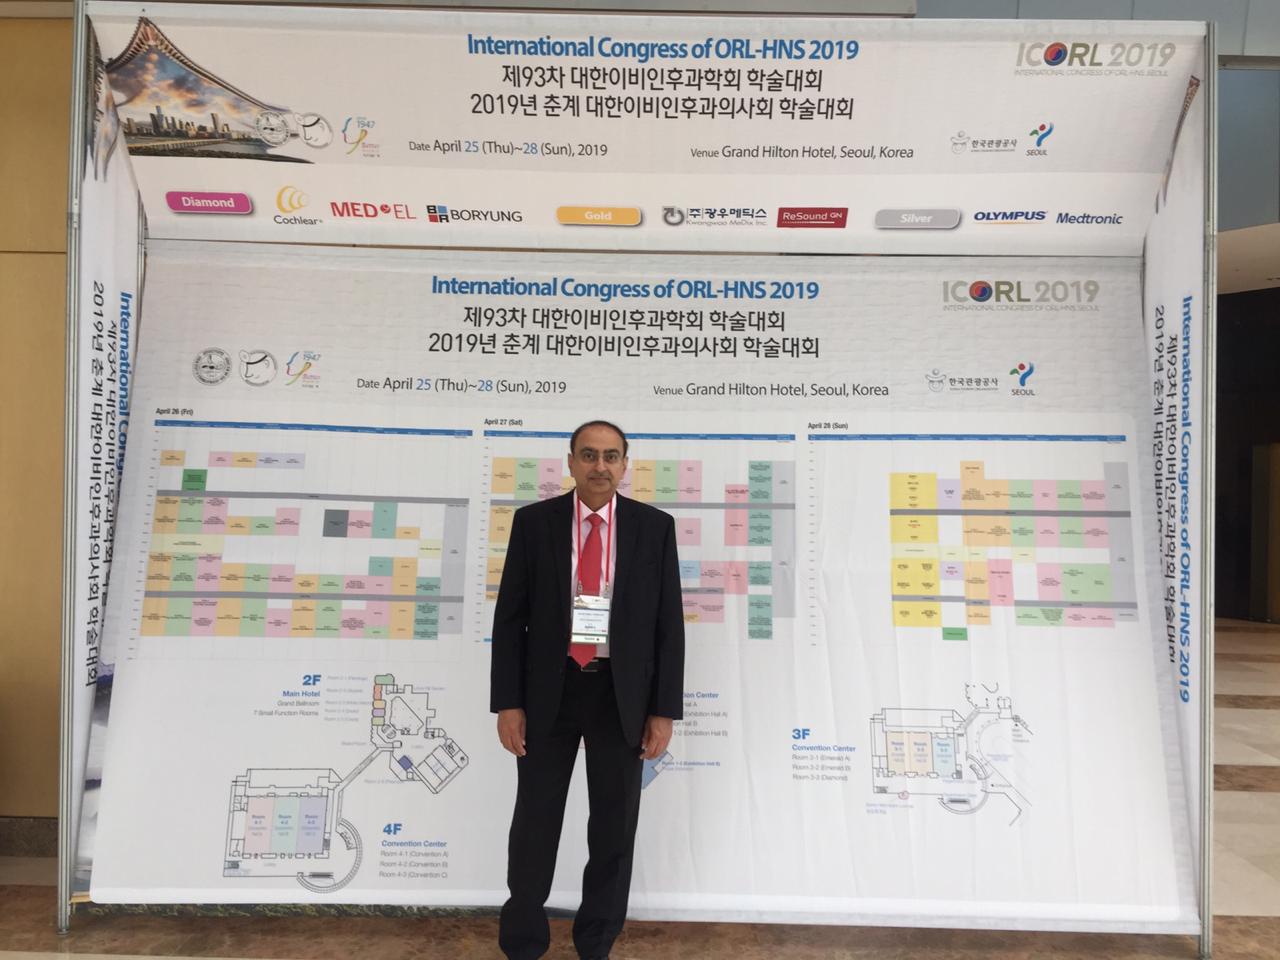 International-Congress-of-ORL-HNS-2019-ICORL-2019-korea-2